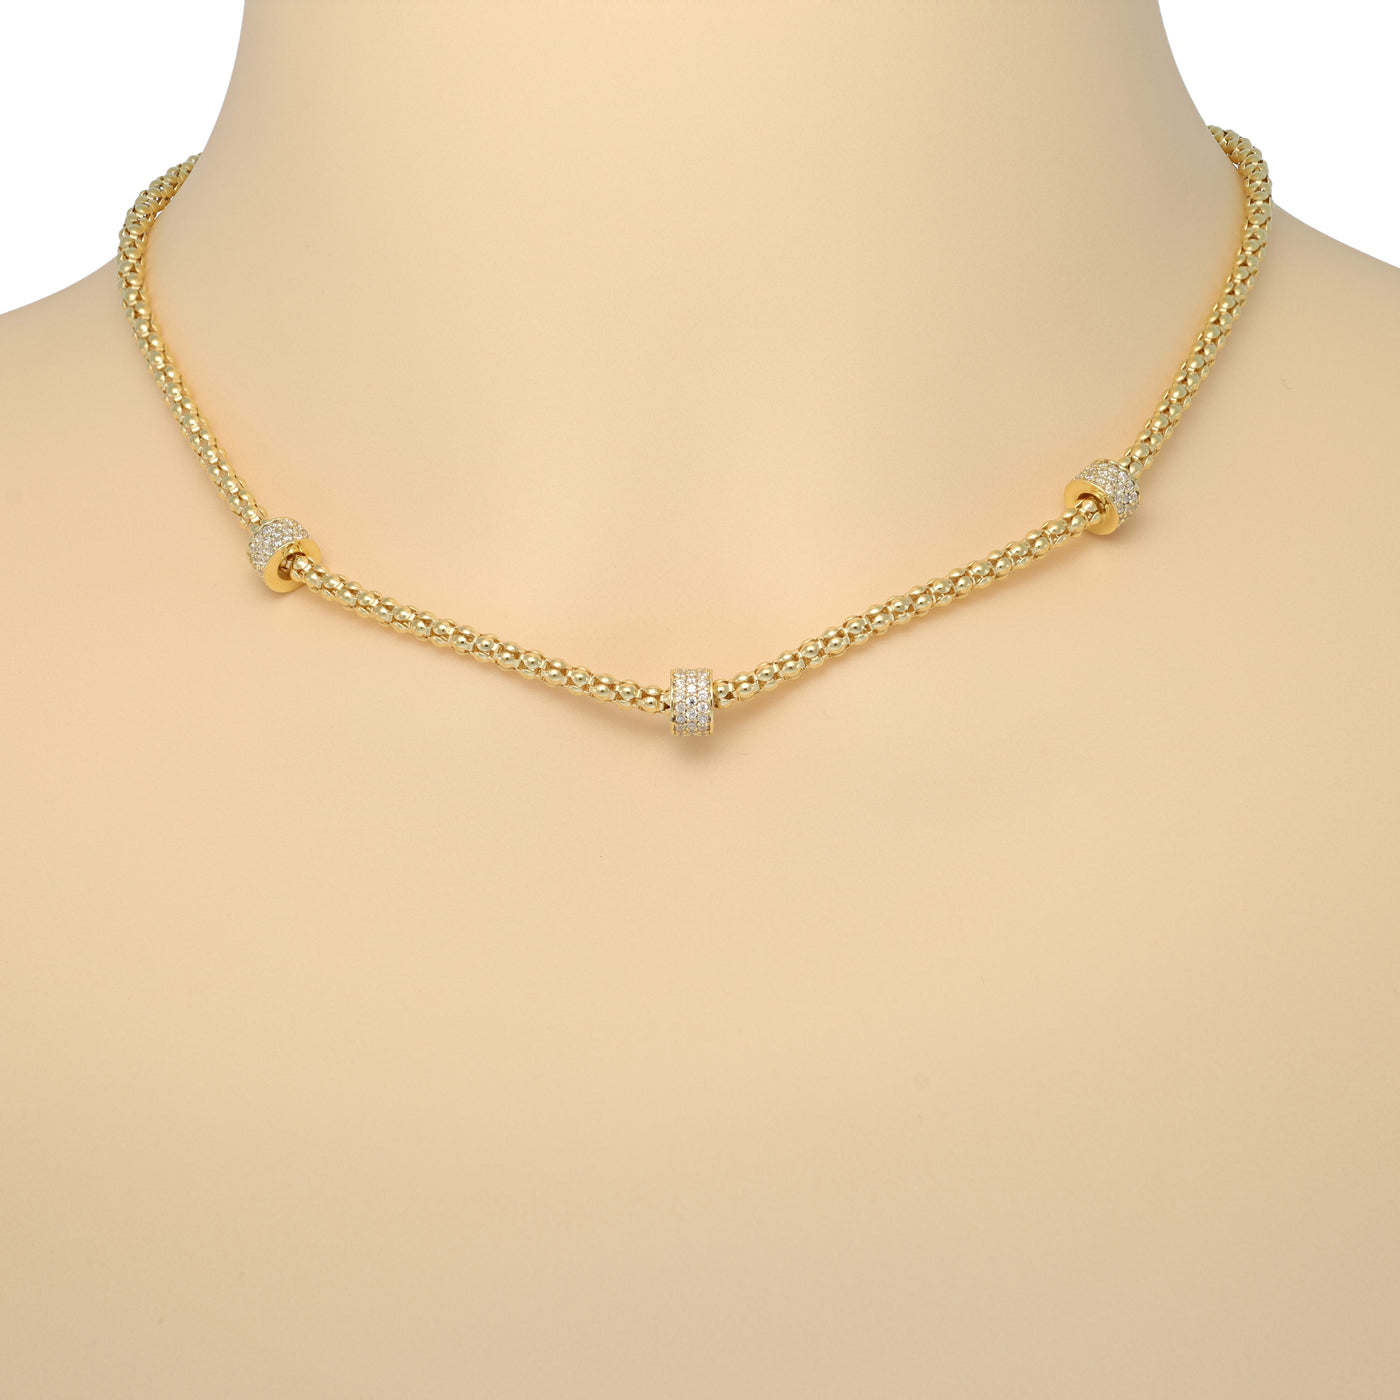 IL Diletto - 925 Italian Silver Necklace, Cubic Zirconia Rondelle, Gold Plated